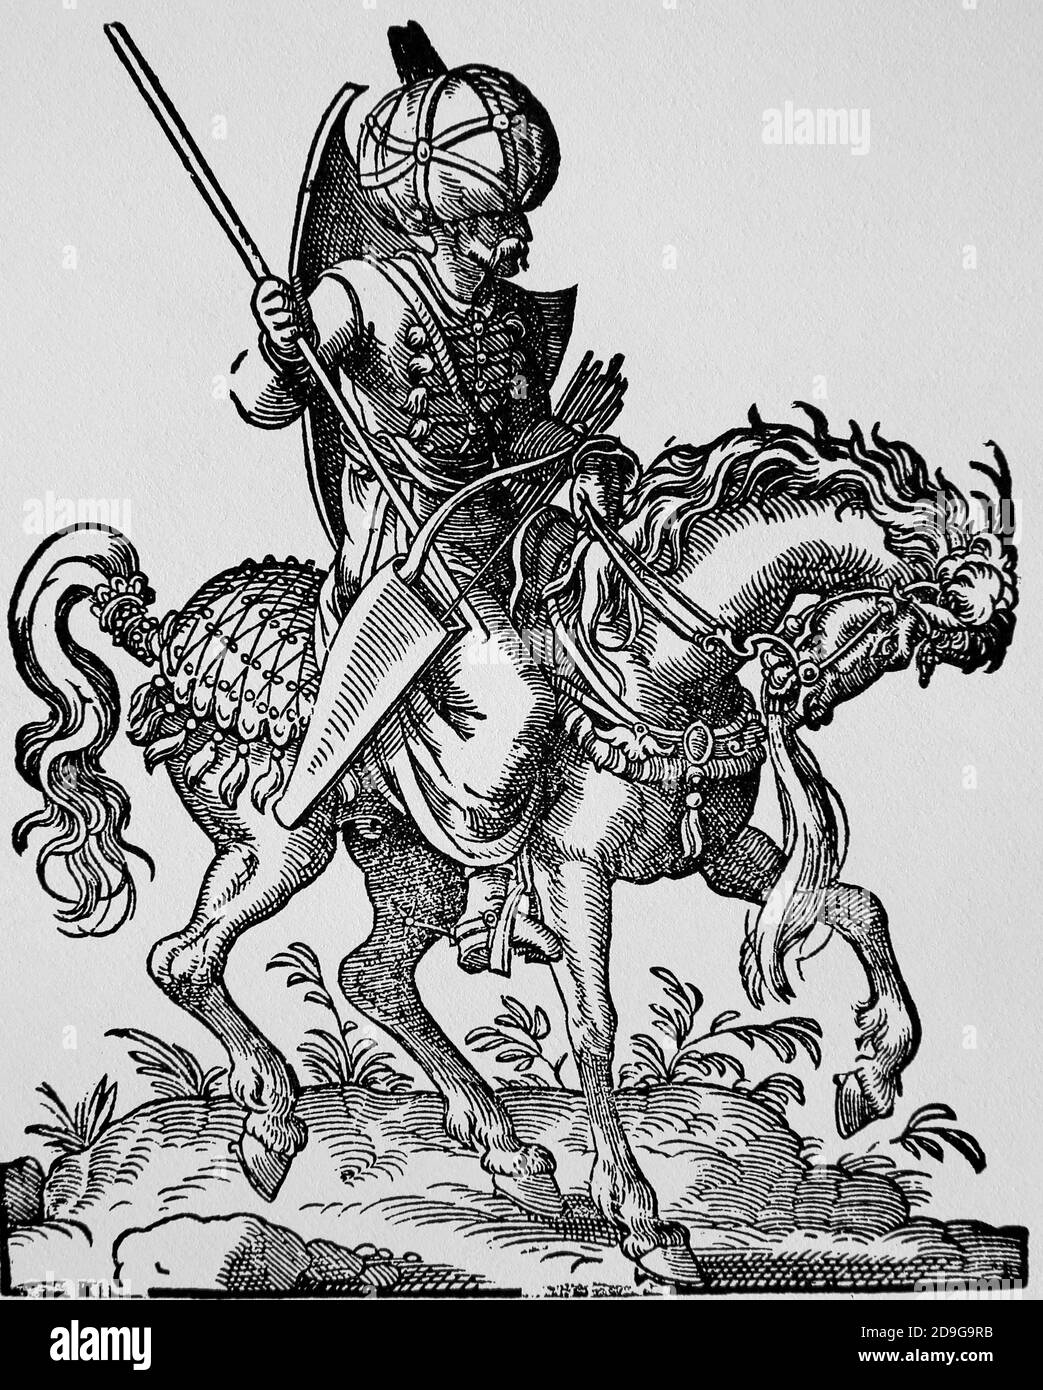 Modern era. Ottoman Empire. 16th century. Turkish cavalryman with bow and arrows. Engraving by Jost Amman, 16th century. Stock Photo